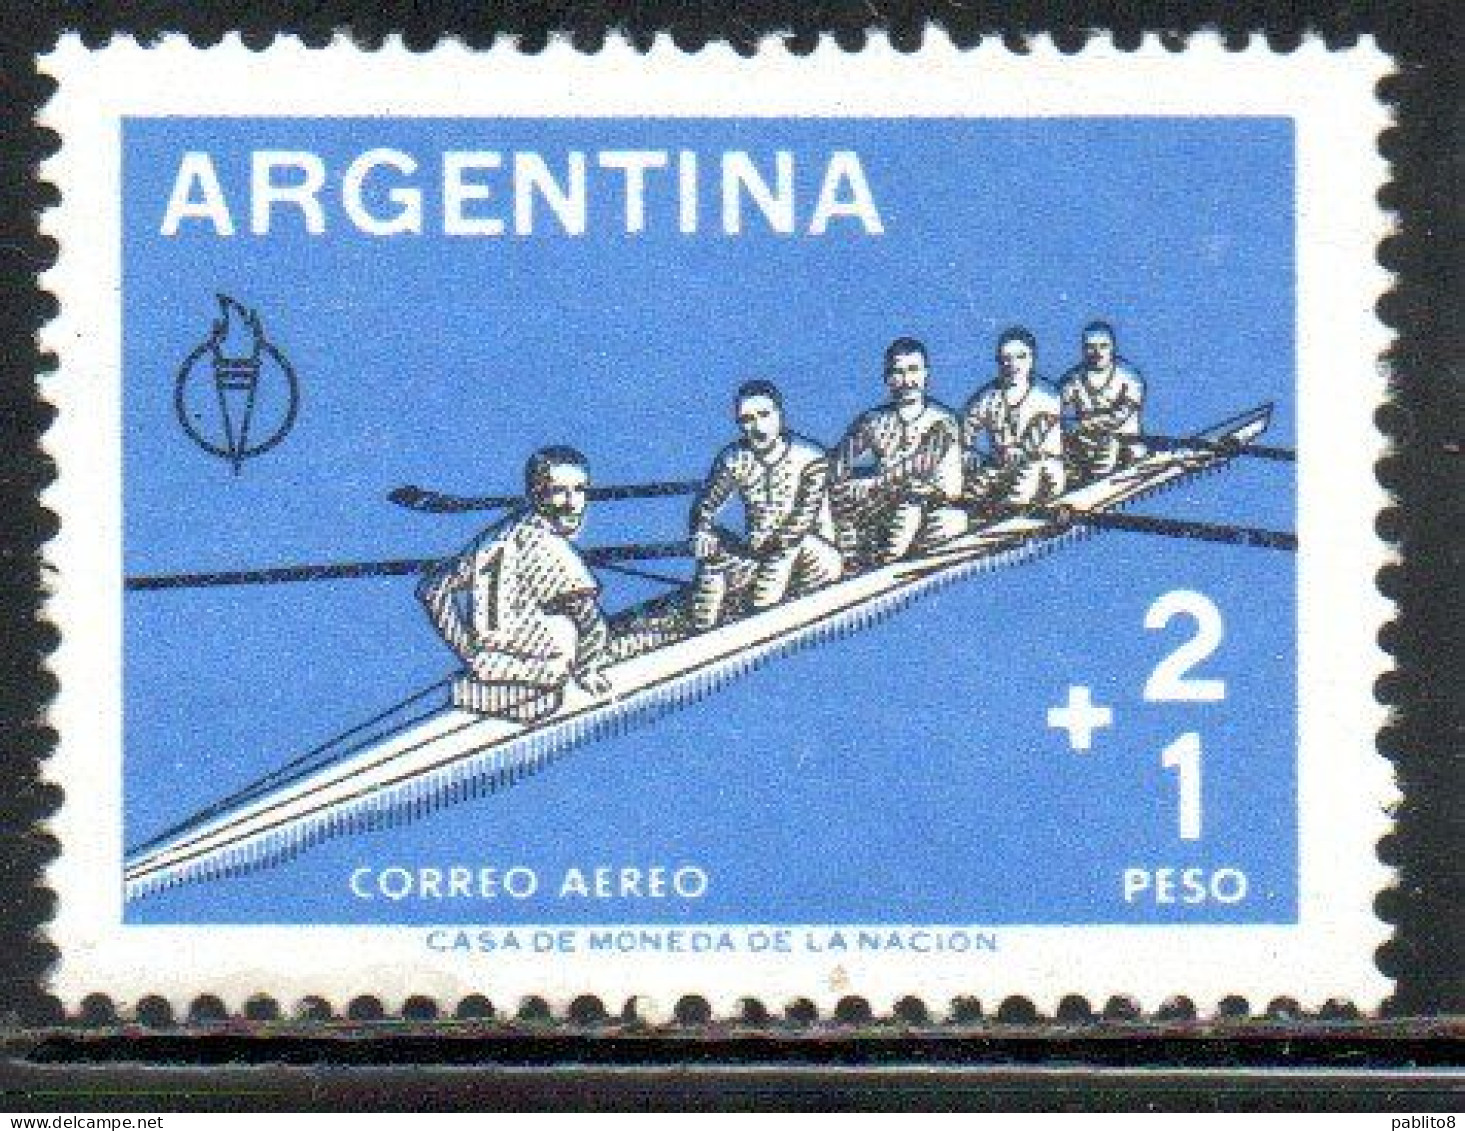 ARGENTINA 1959 AIR POST MAIL AIRMAIL CORREO AEREO ATHLETICS ROWING 2p + 1p MNH - Posta Aerea